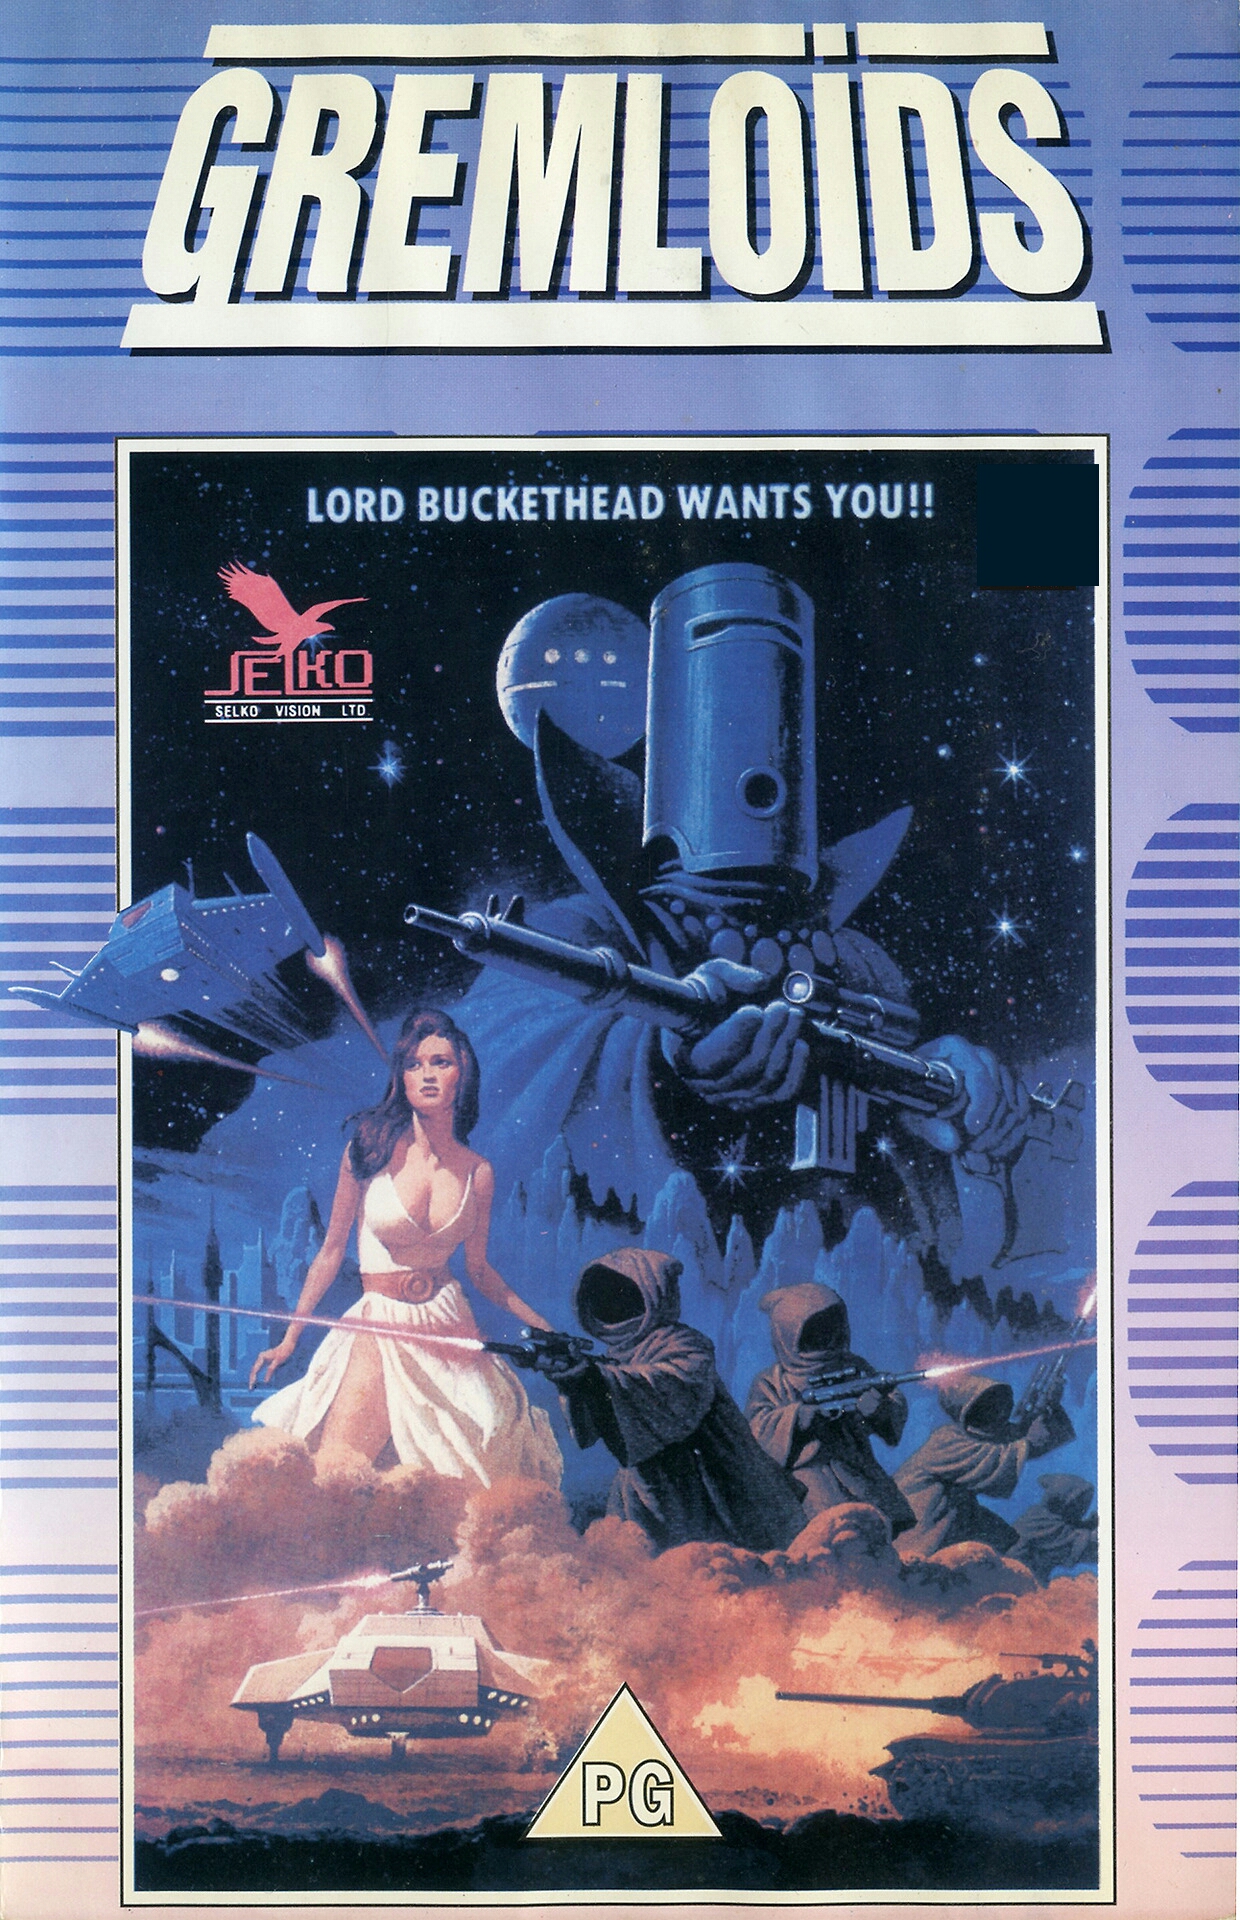 Hyperspace (1984) Screenshot 4 